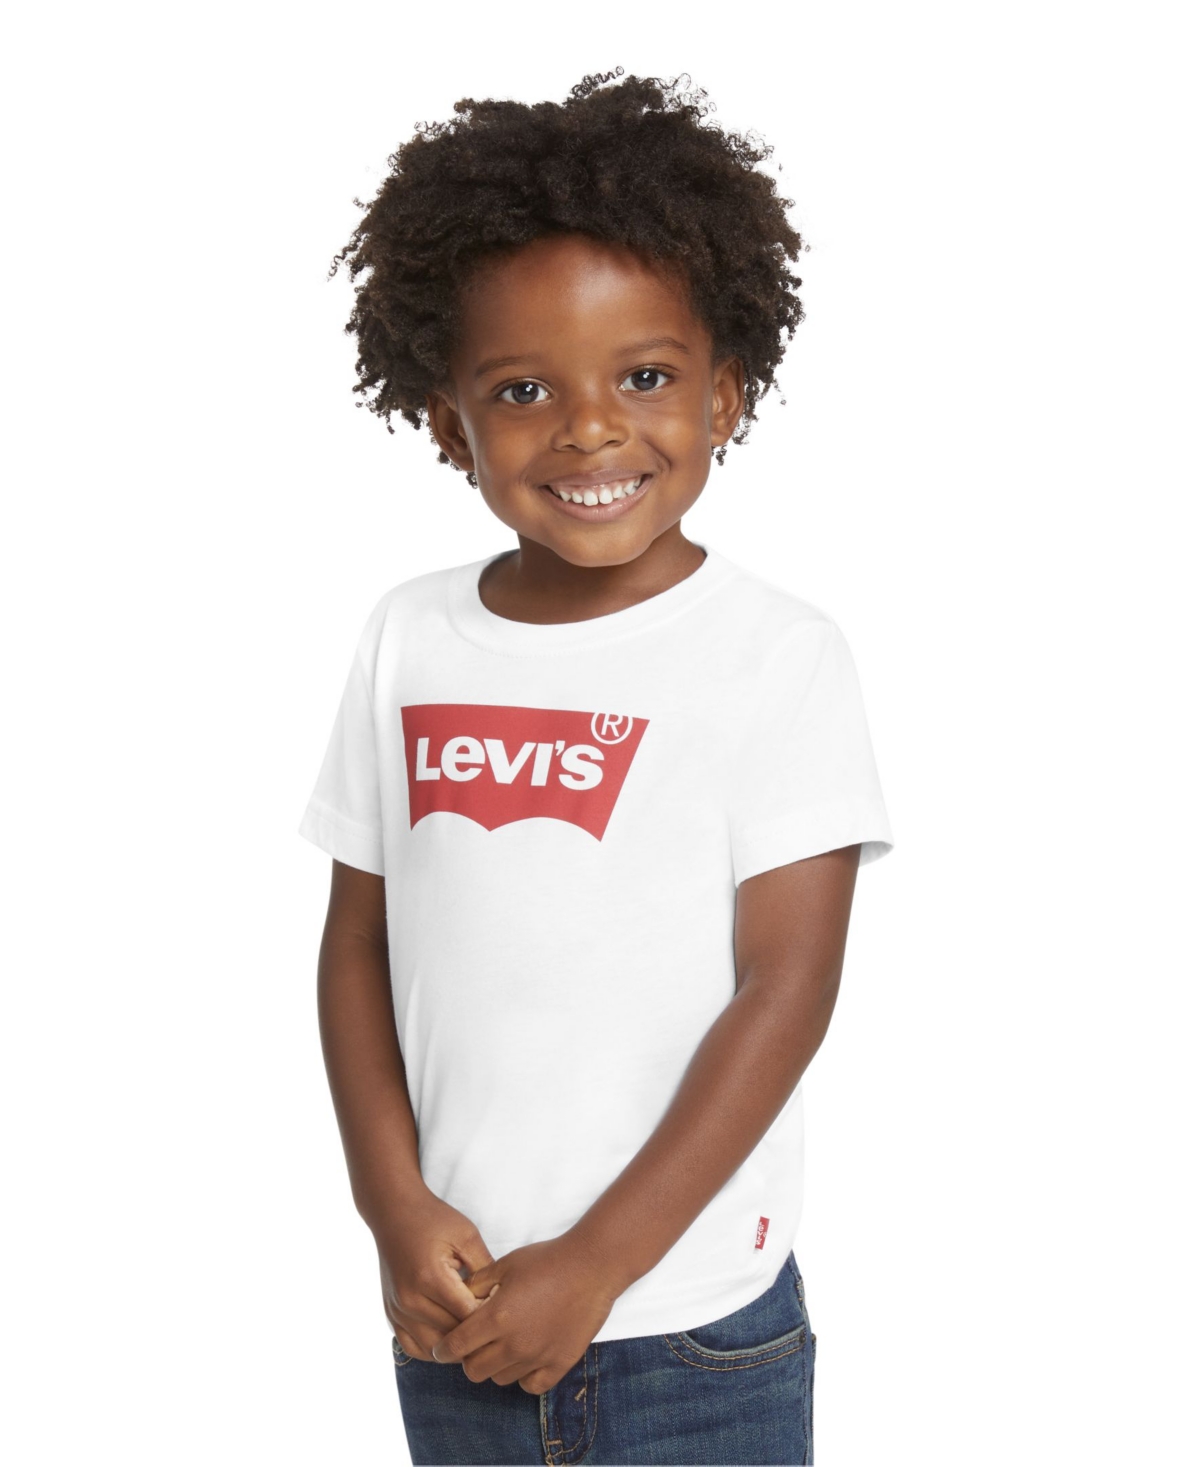 Levis Toddler Boys Graphic-Print Cotton T-Shirt